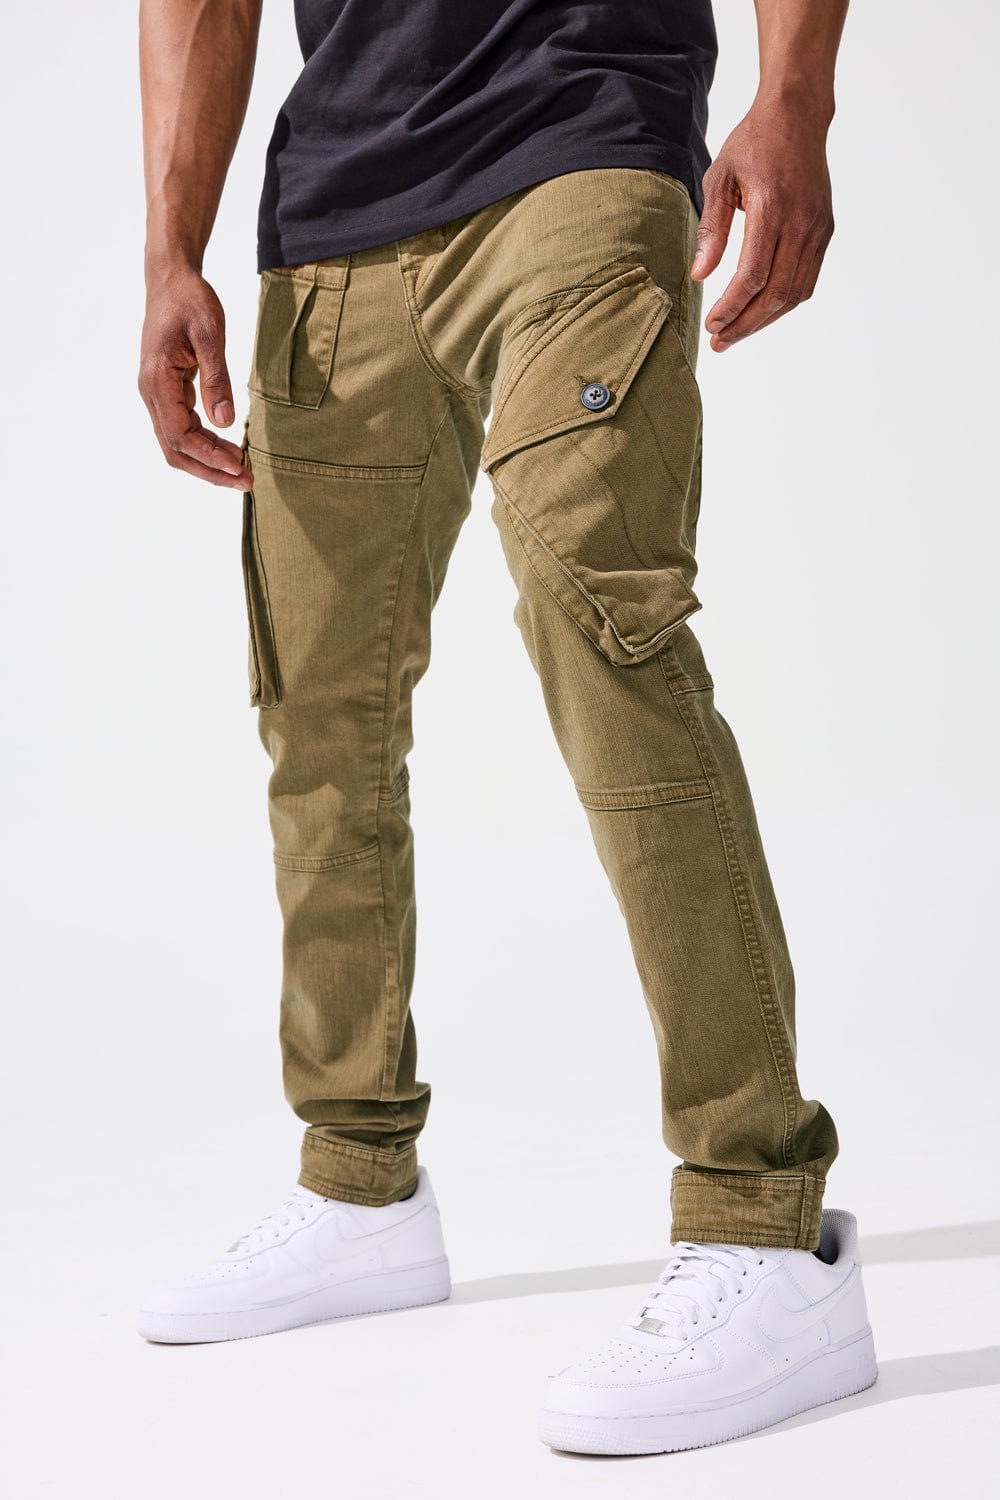 Jordan Craig Aaron - Trailblazer Cargo Pants (Military Olive) 30/32 / Military Olive